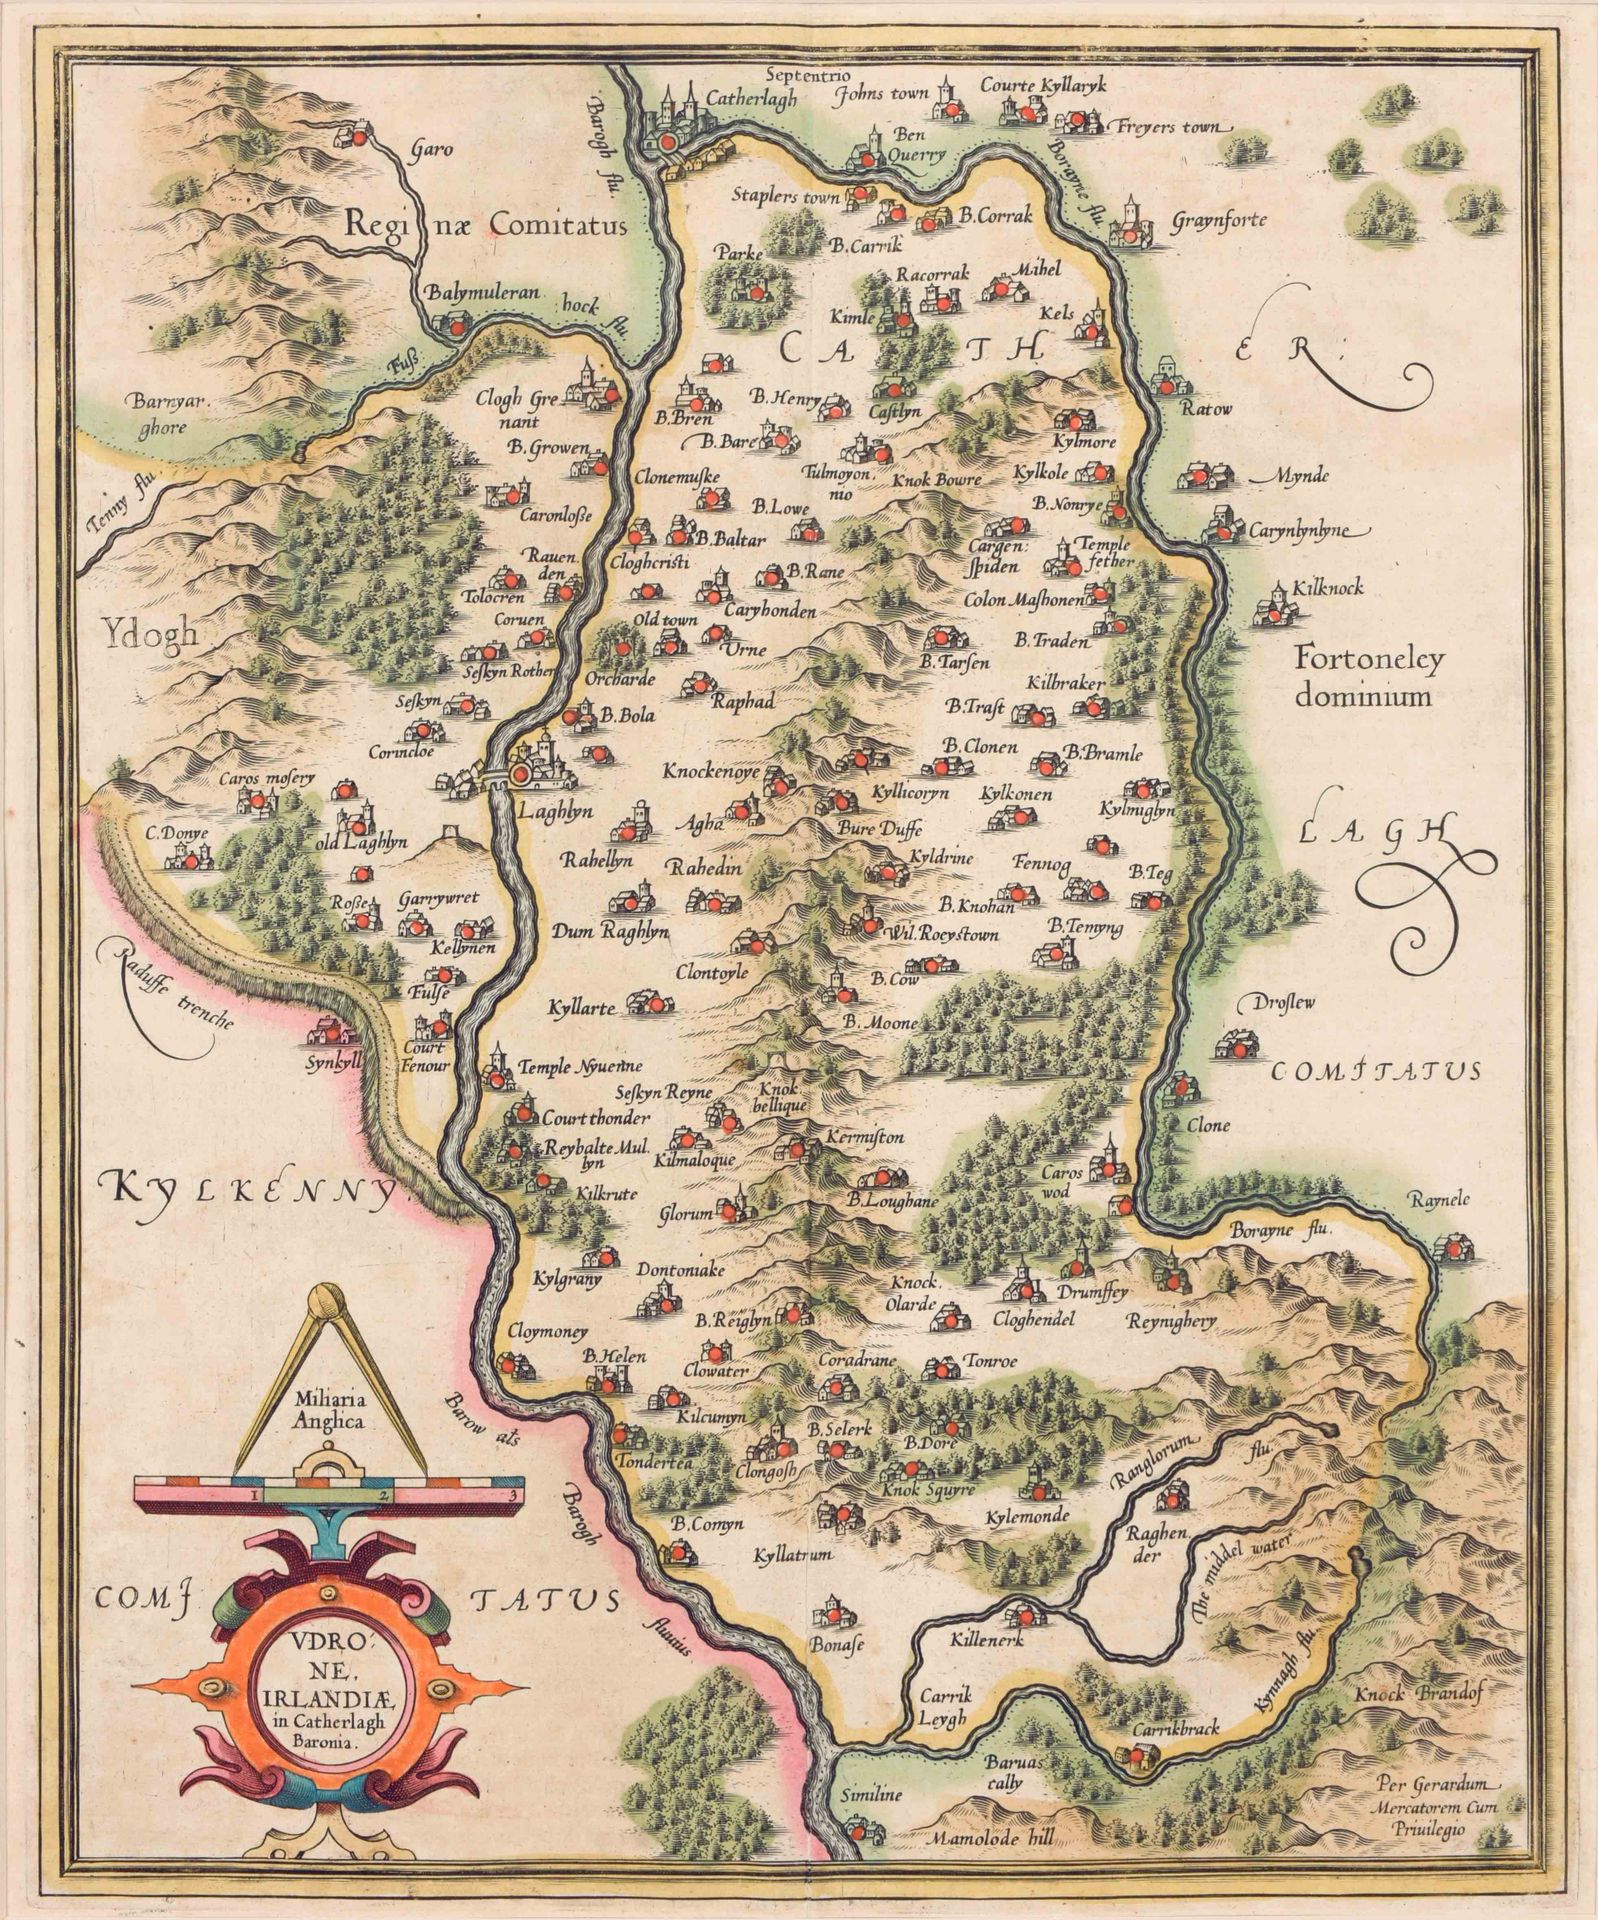 [IRELAND] 乌龙。卡瑟拉格-巴罗尼亚（卡洛）的欧兰迪亚（Irlandiae）。

原版手绘地图(34.5 x 28 cm)，由墨卡托用金色绘制。1610&hellip;